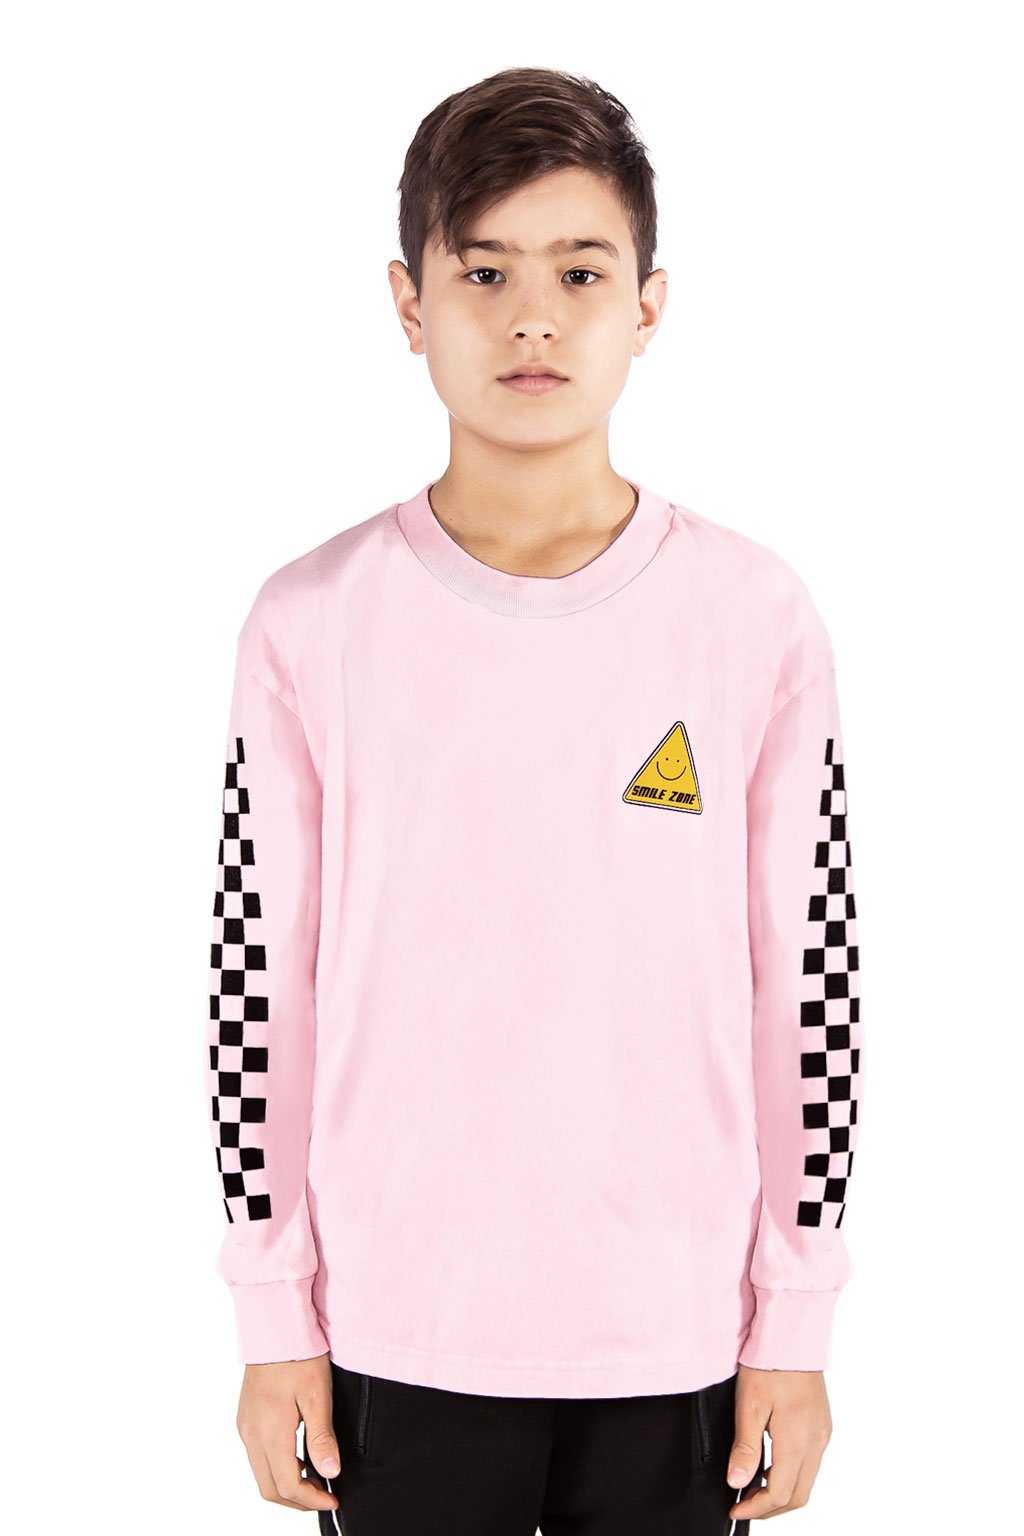 Pink Smile Zone Long Sleeve T-shirt - Port 213.com 